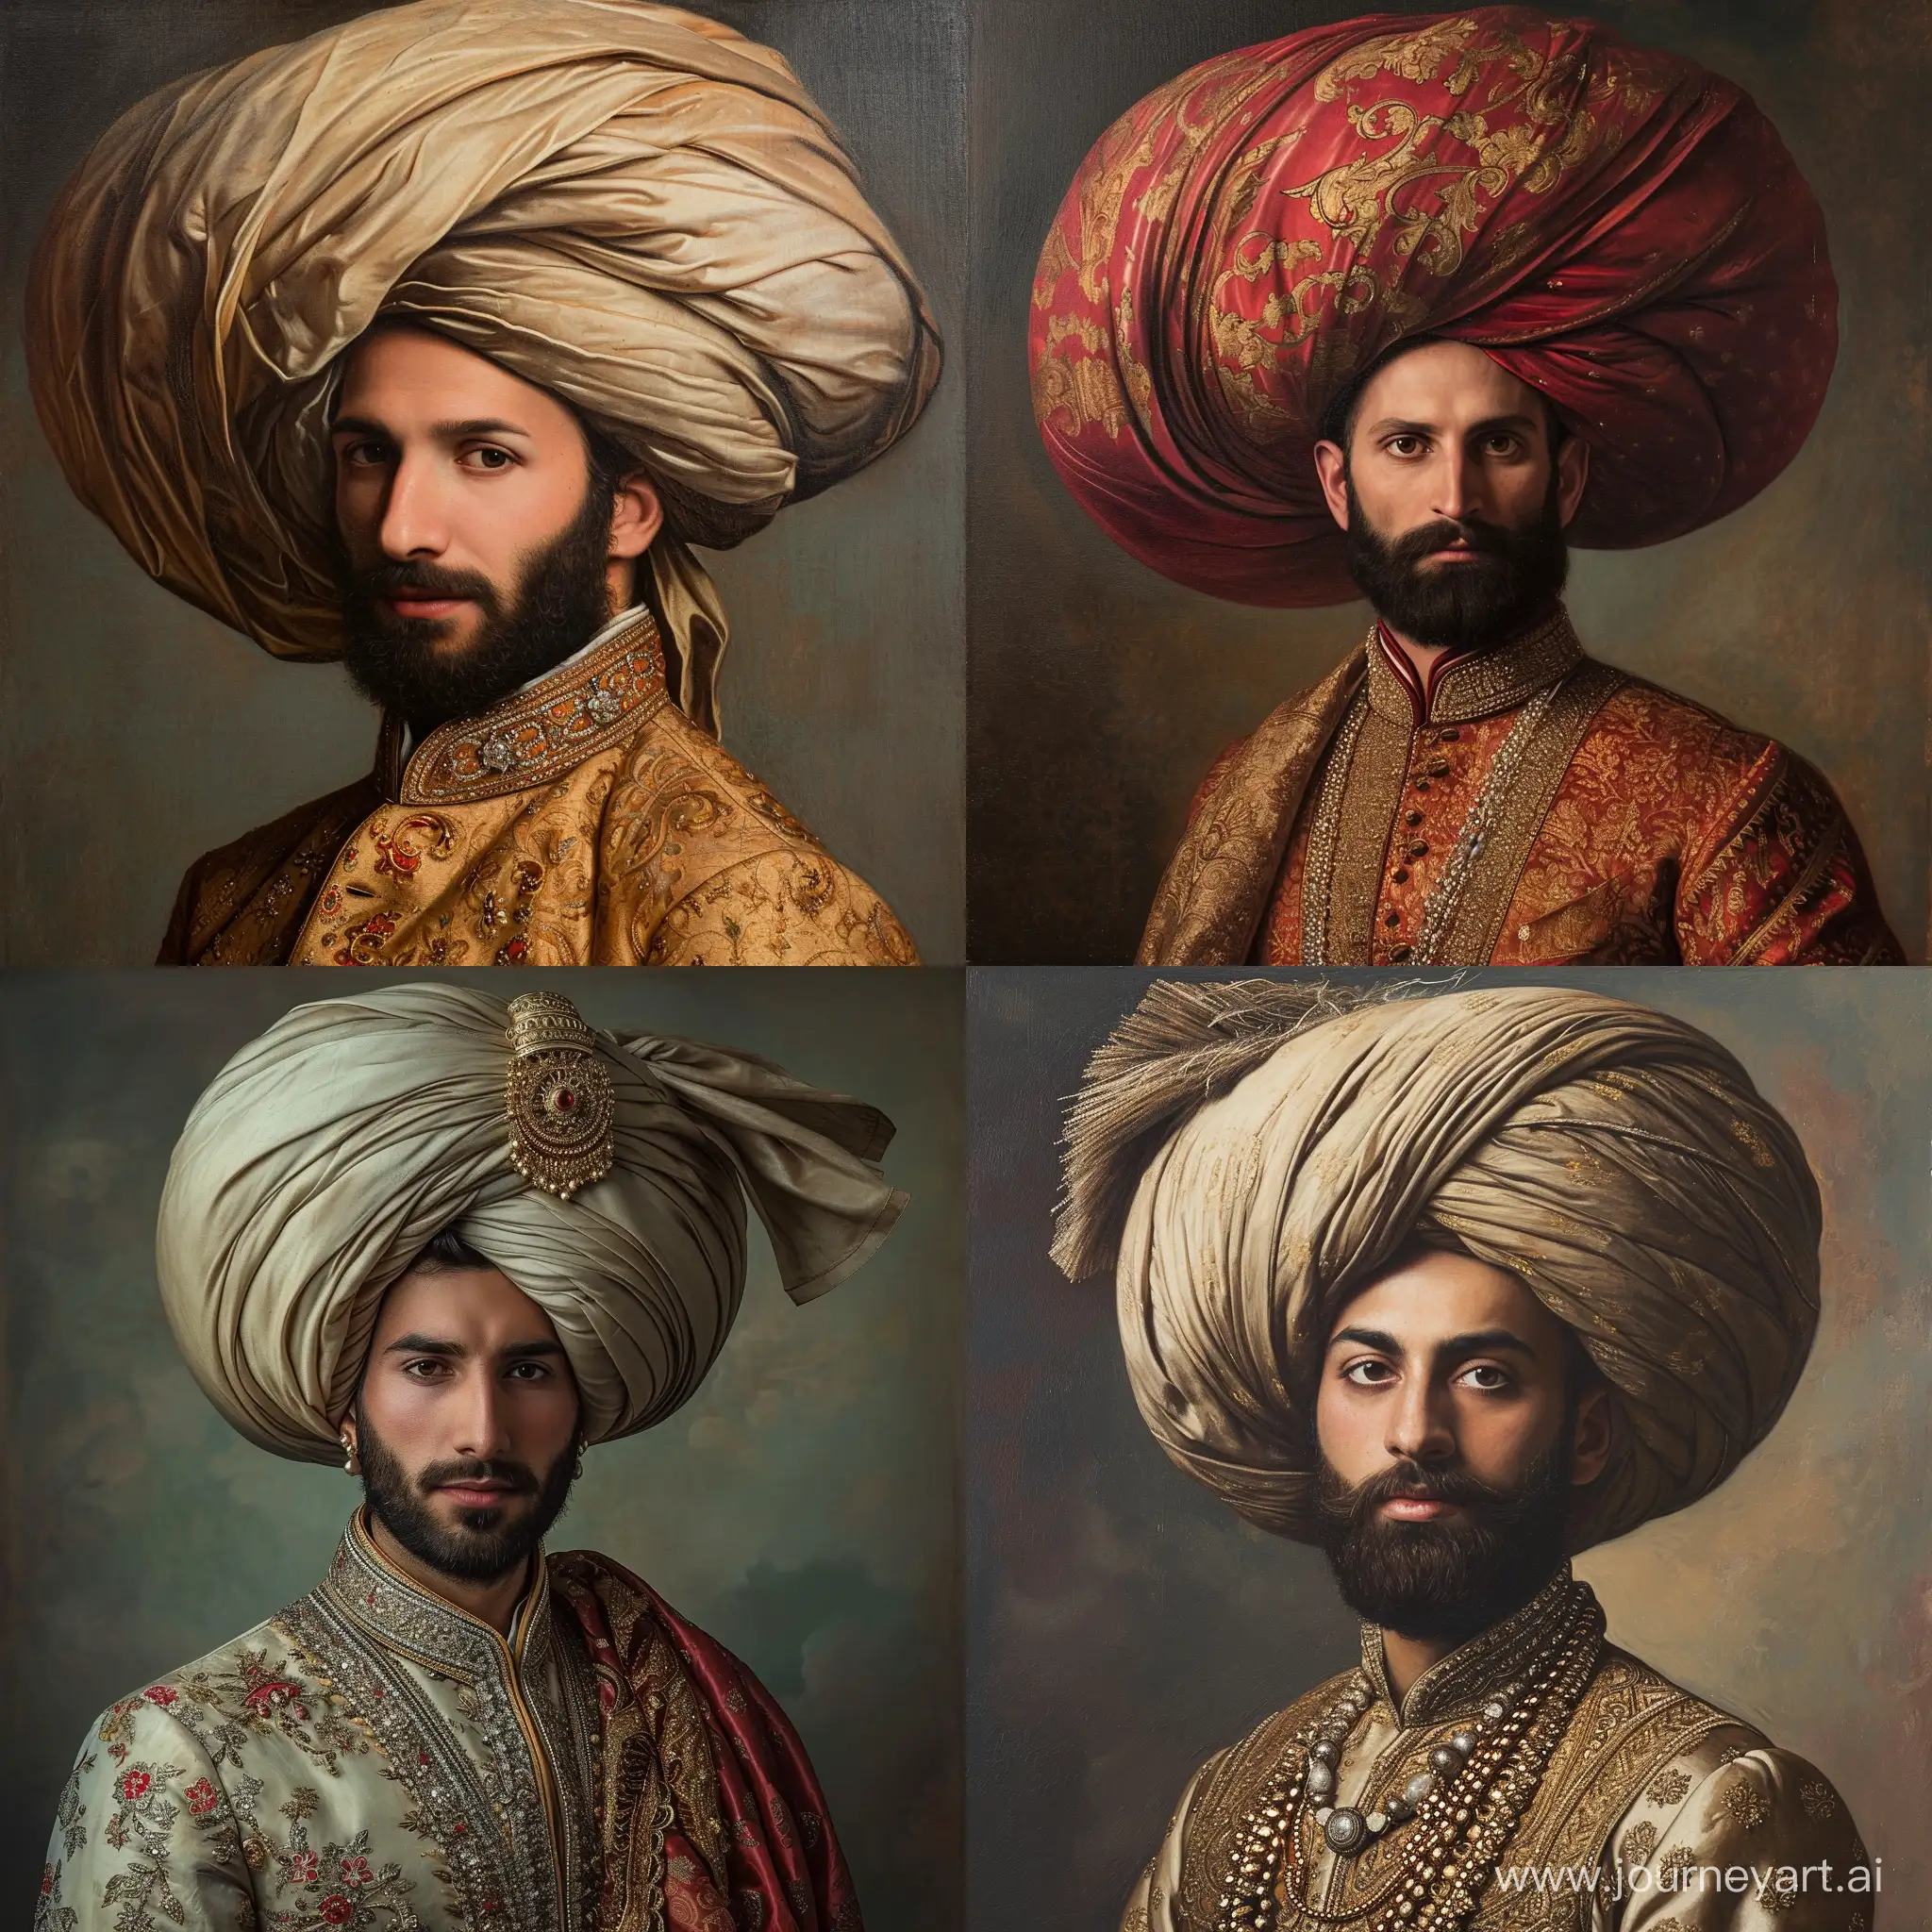 Renaissance-Portrait-with-Ottoman-Turban-and-Mughal-Sherwani-Attire